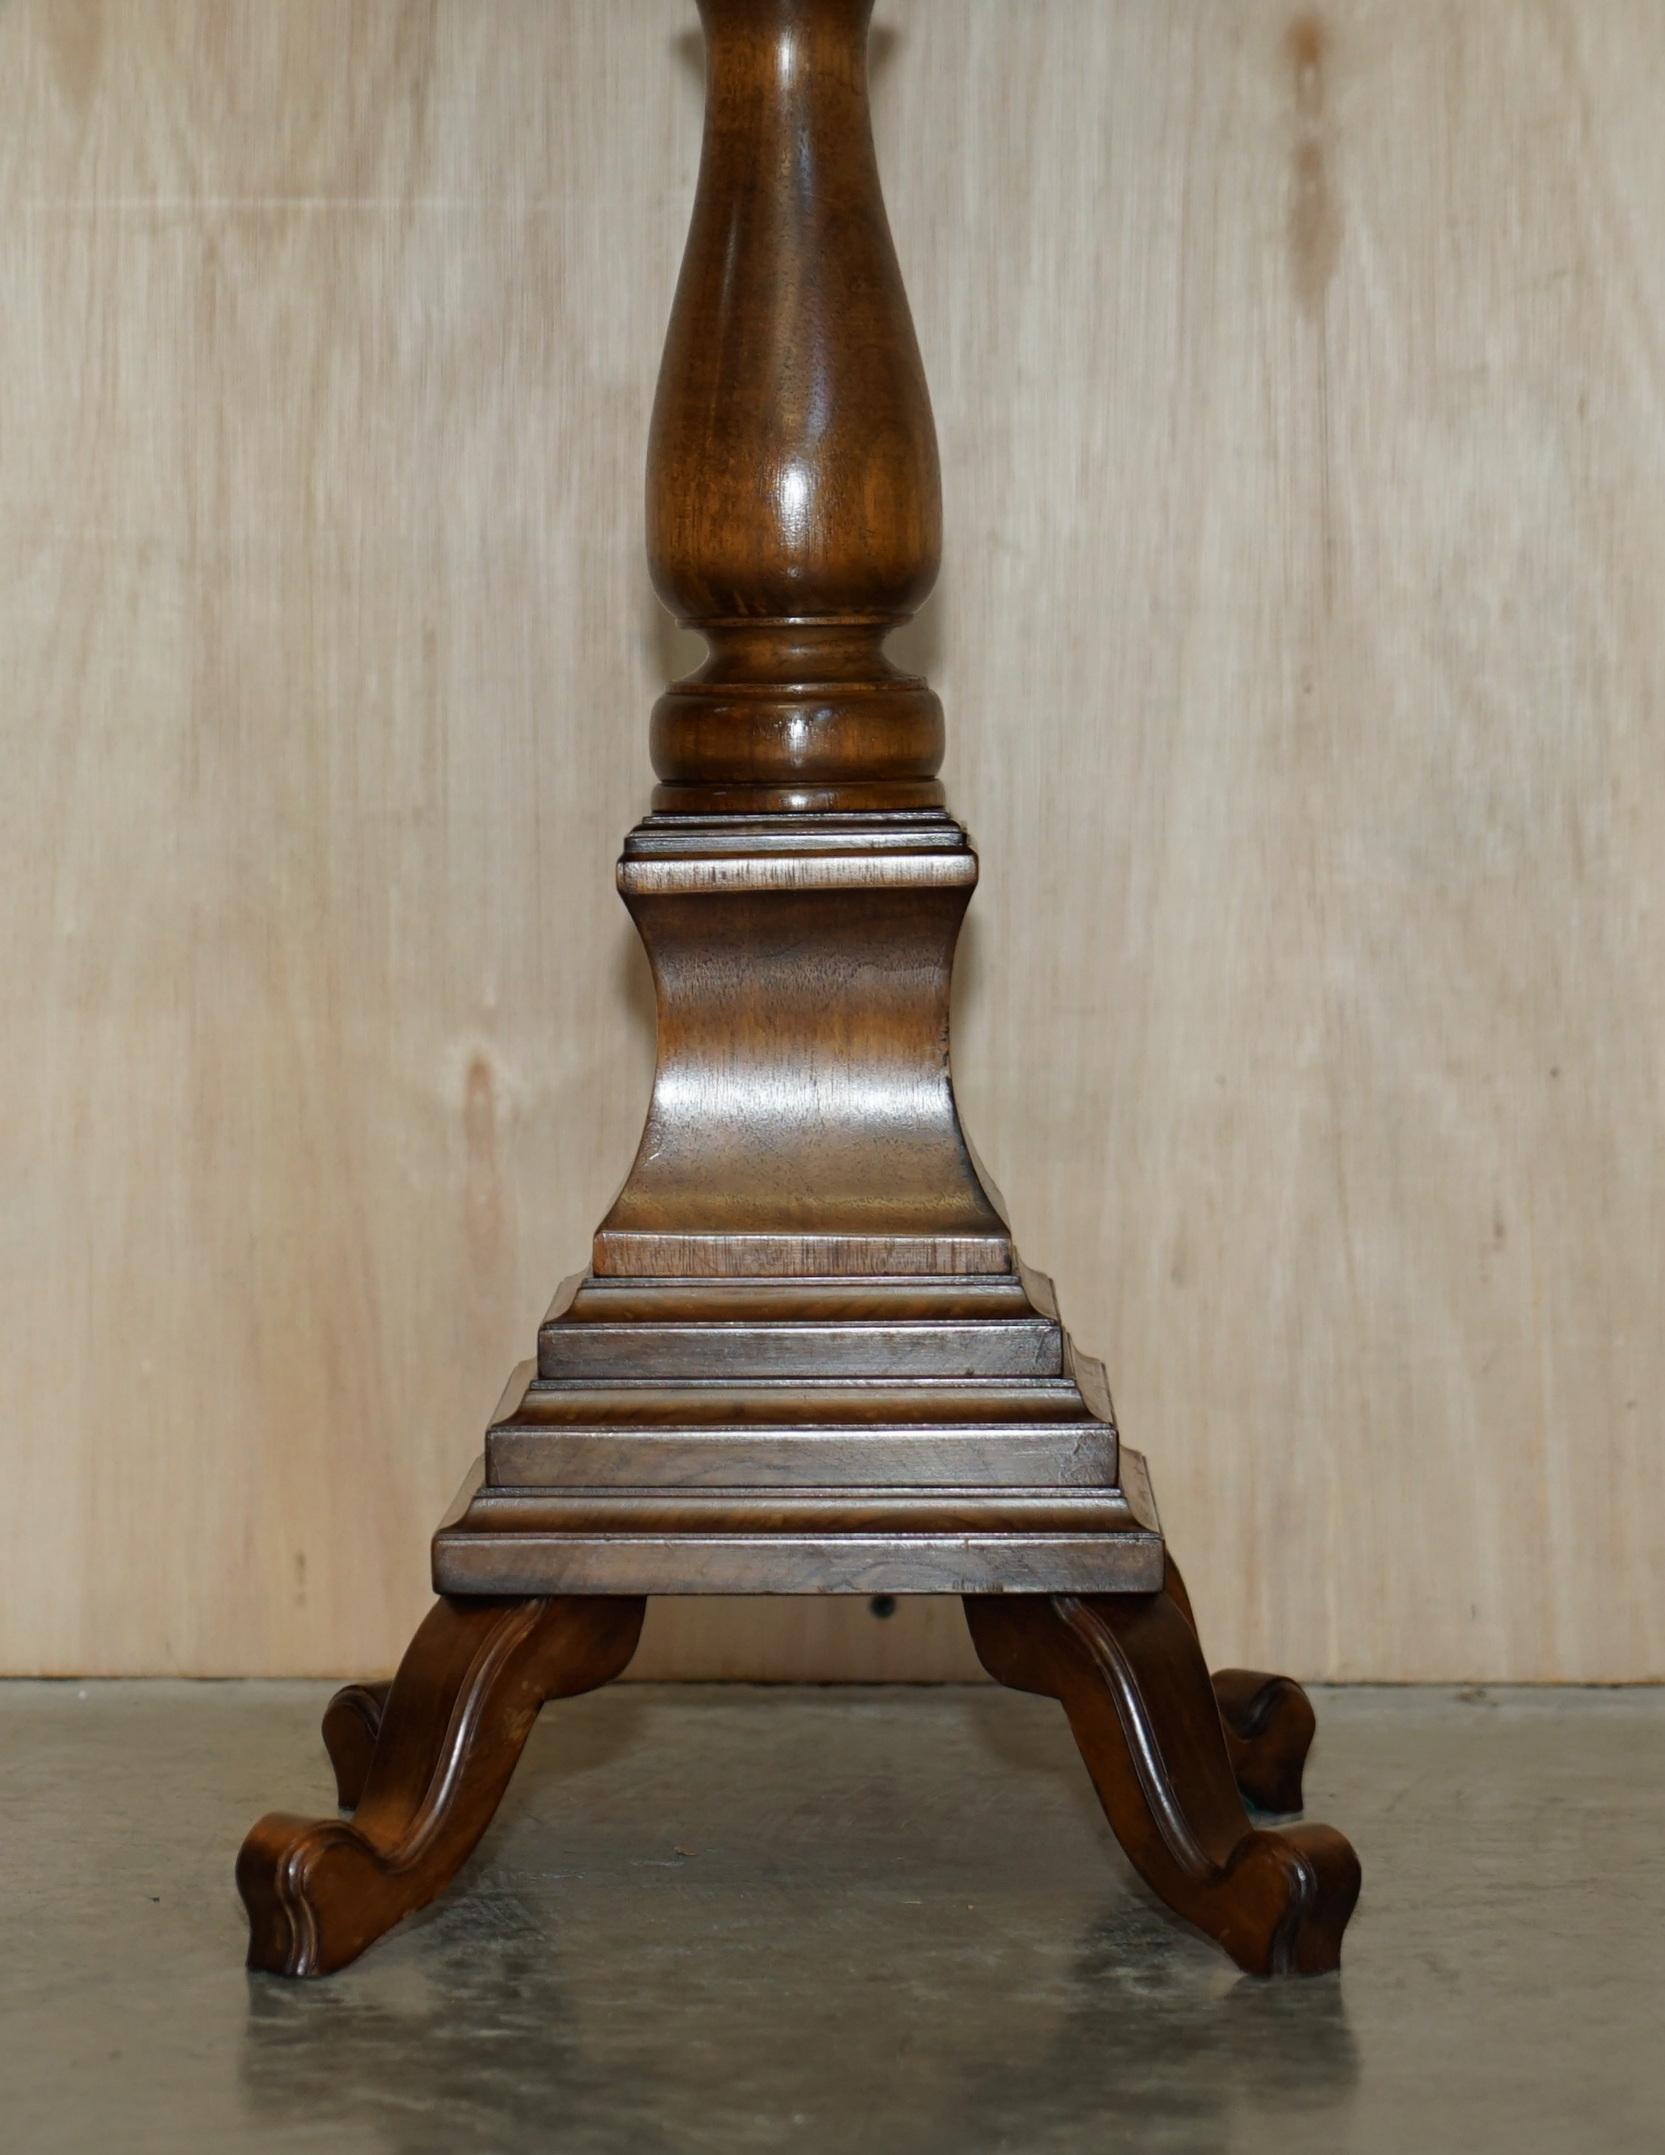 Fine English Made JB Wright Cabinet Maker Regency Revival Side End Lamp Table For Sale 2